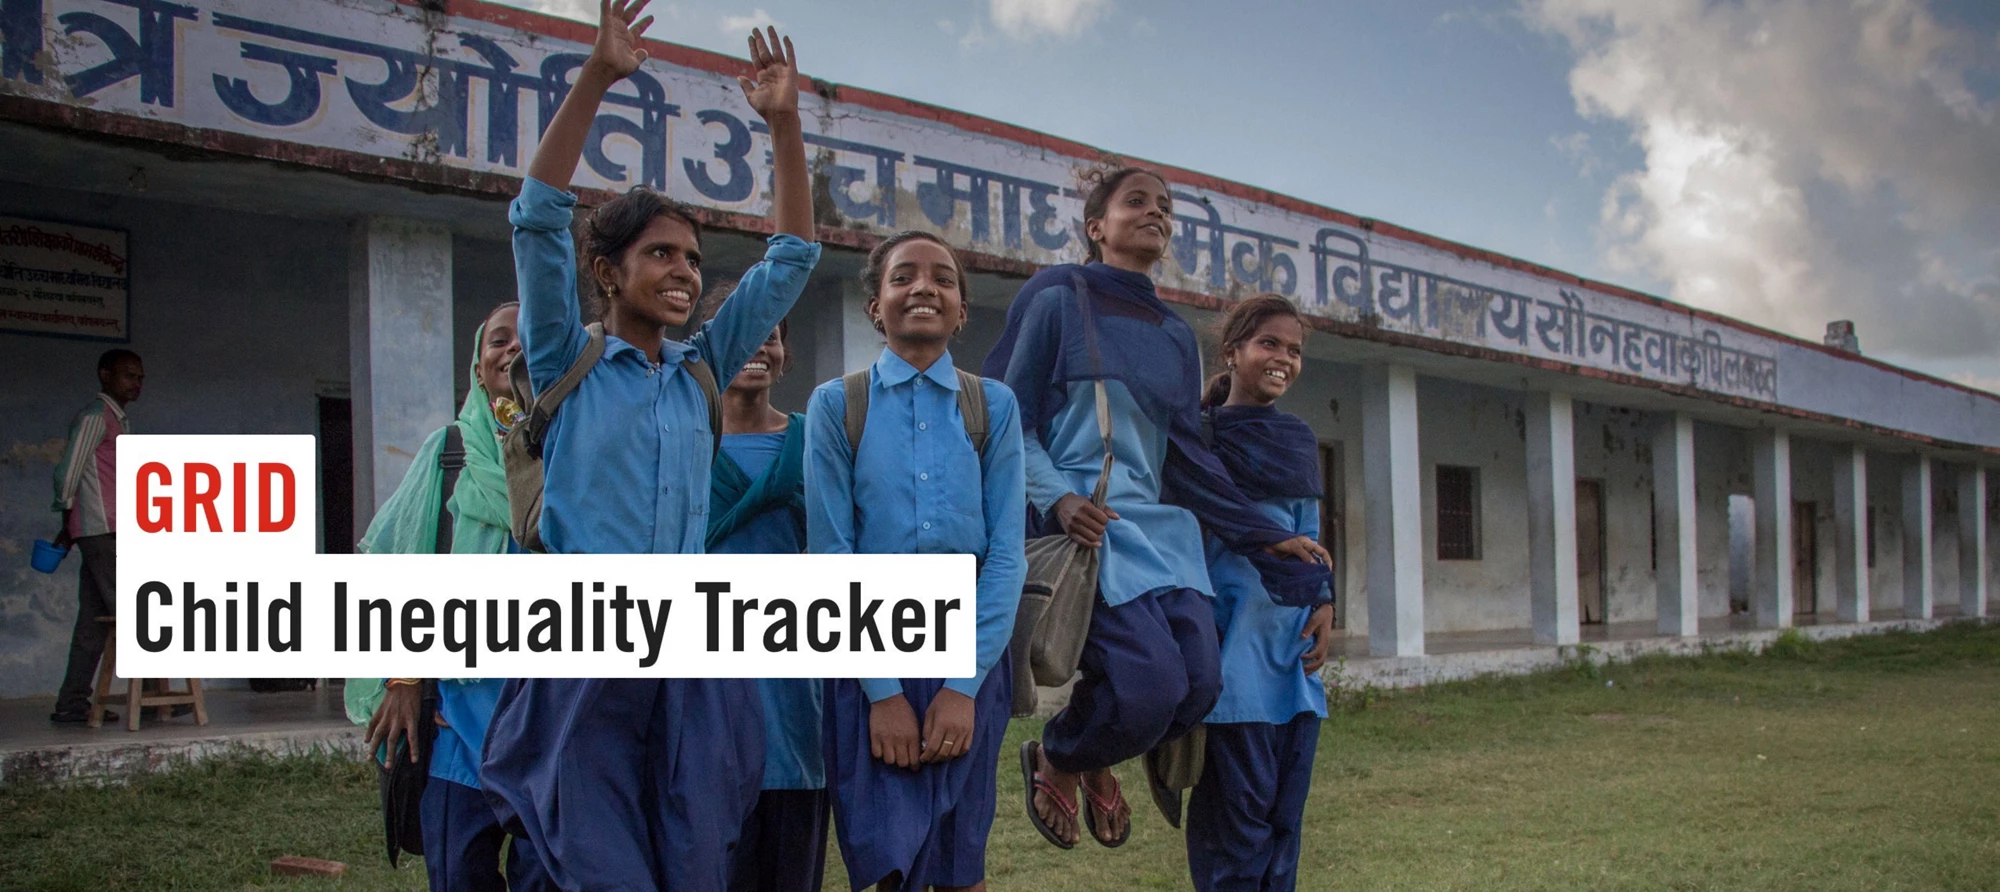 GRID Child Inequality Tracker